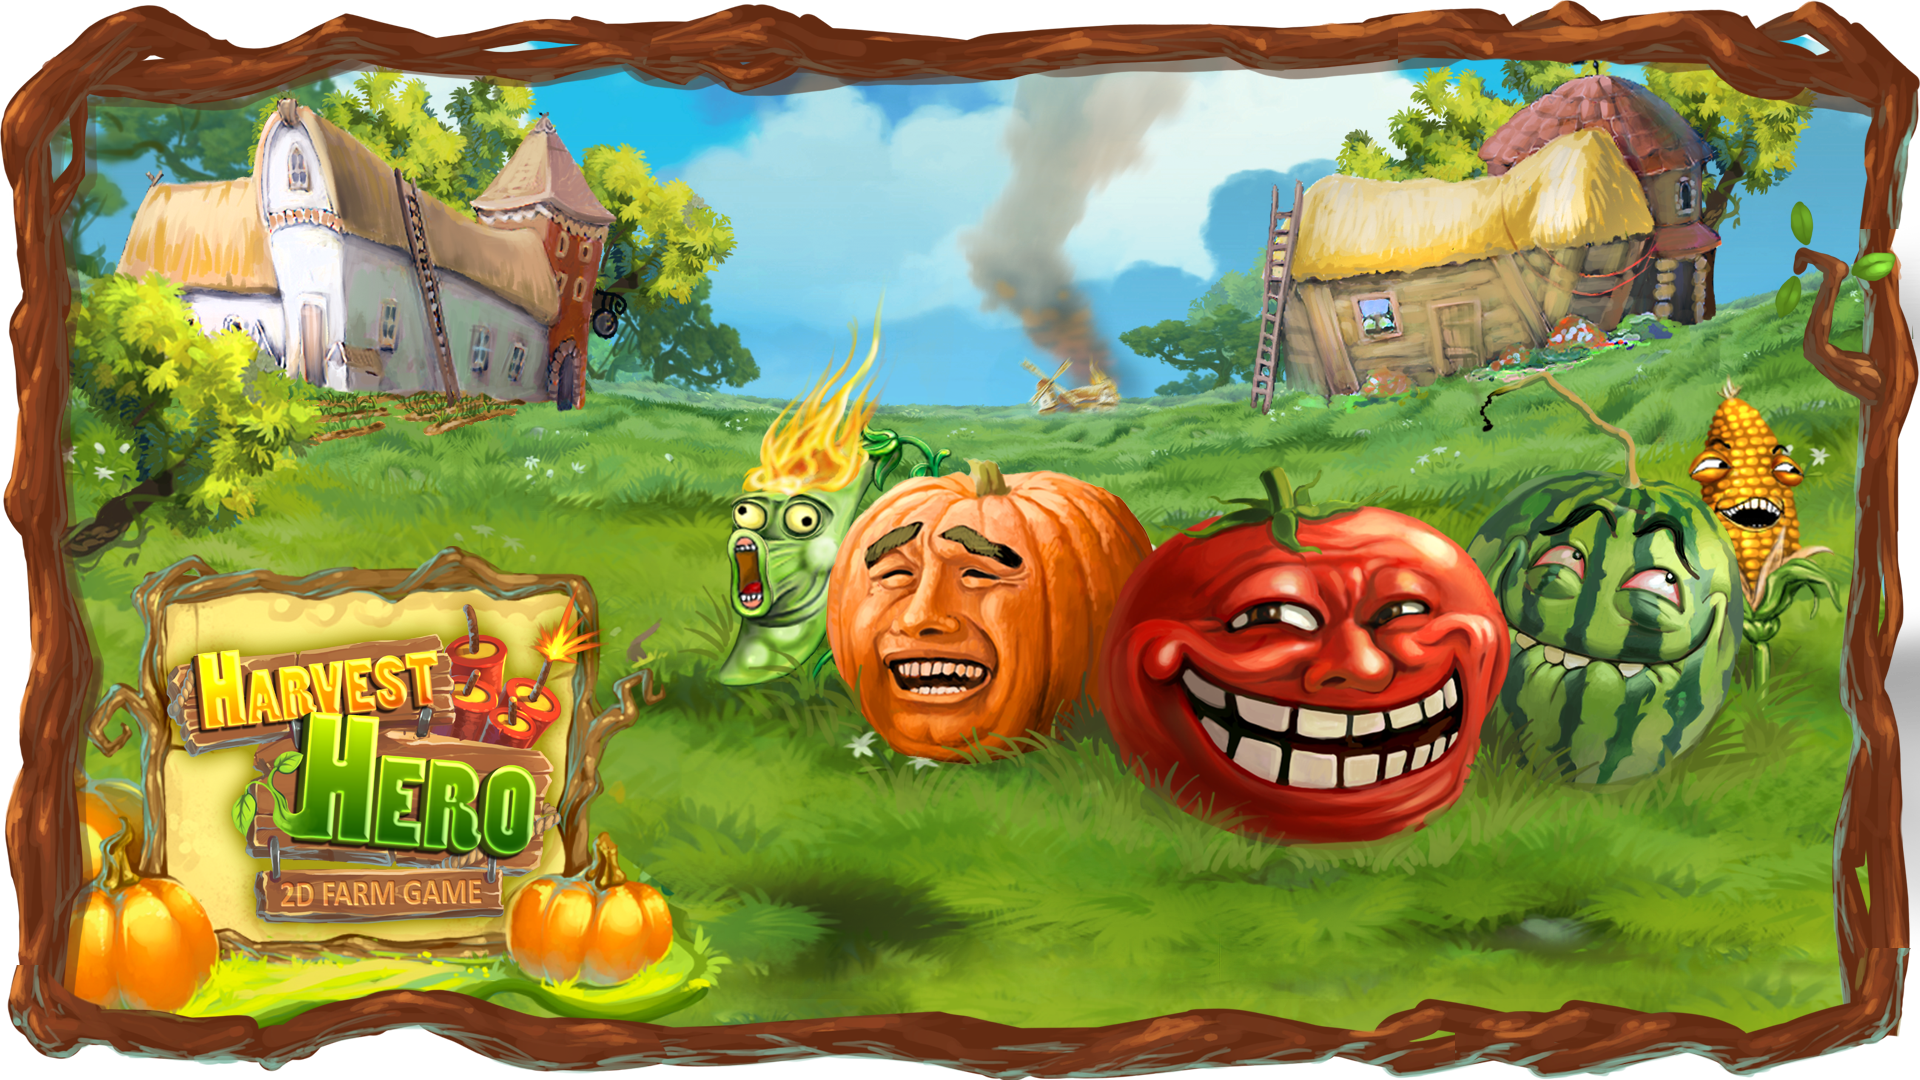 Harvest Hero - 2D Farm Game Screenshot #4